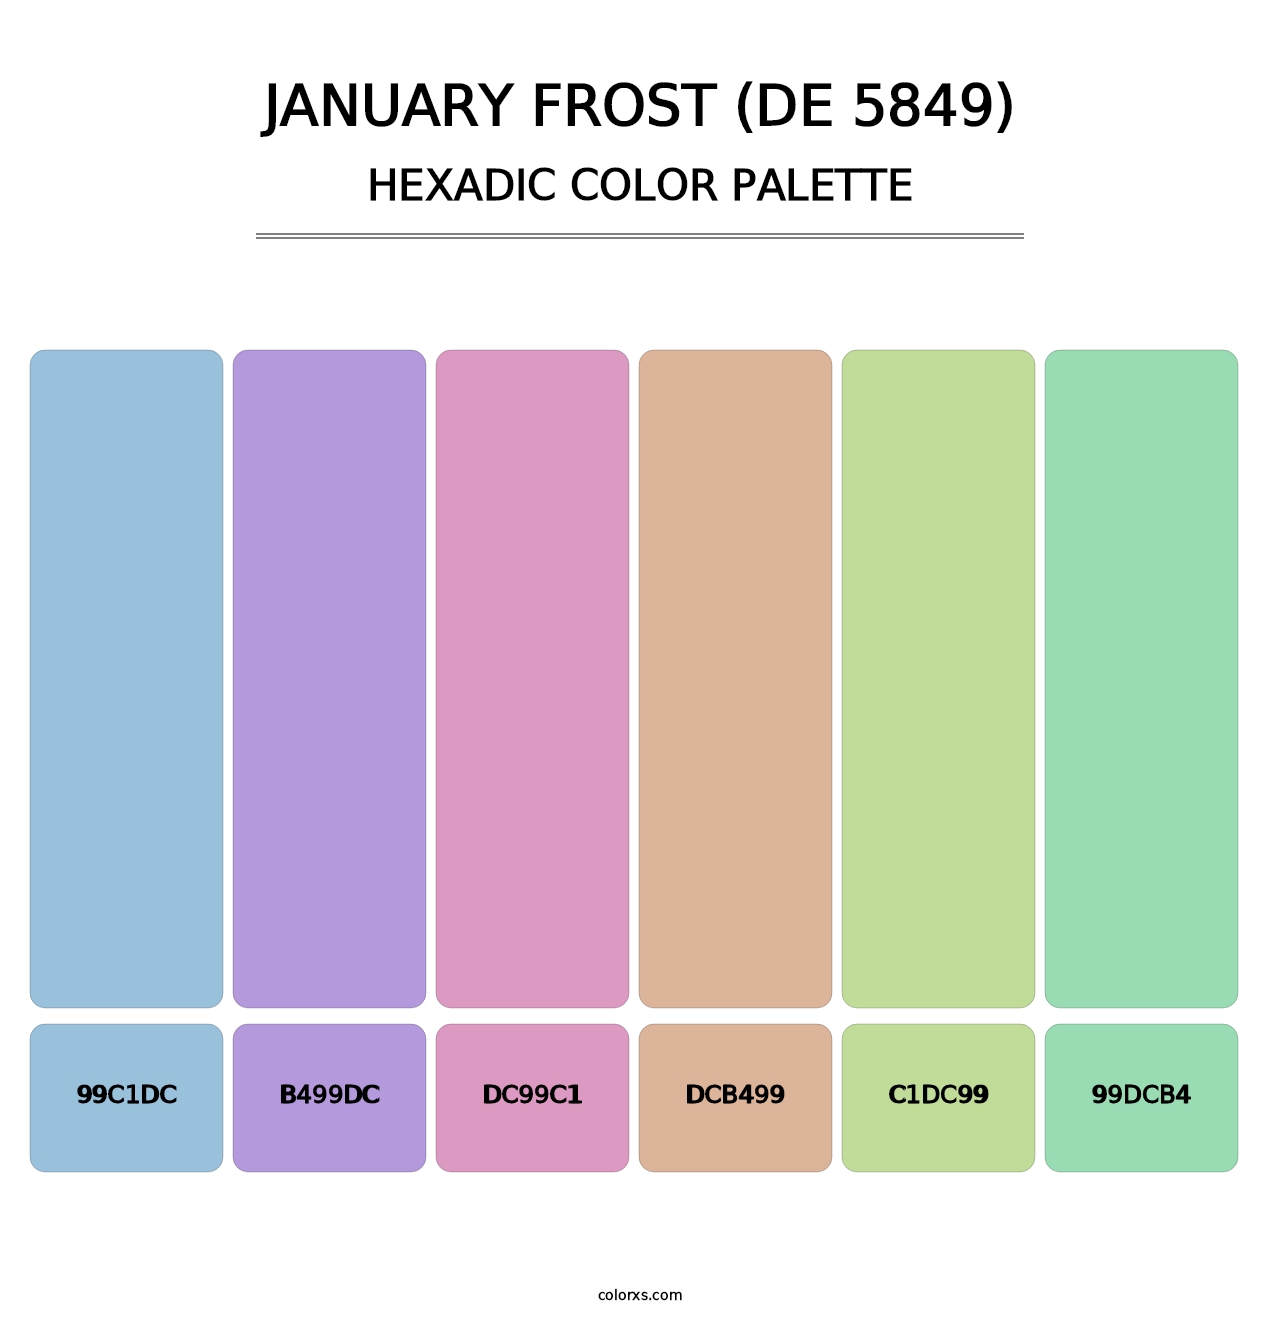 January Frost (DE 5849) - Hexadic Color Palette